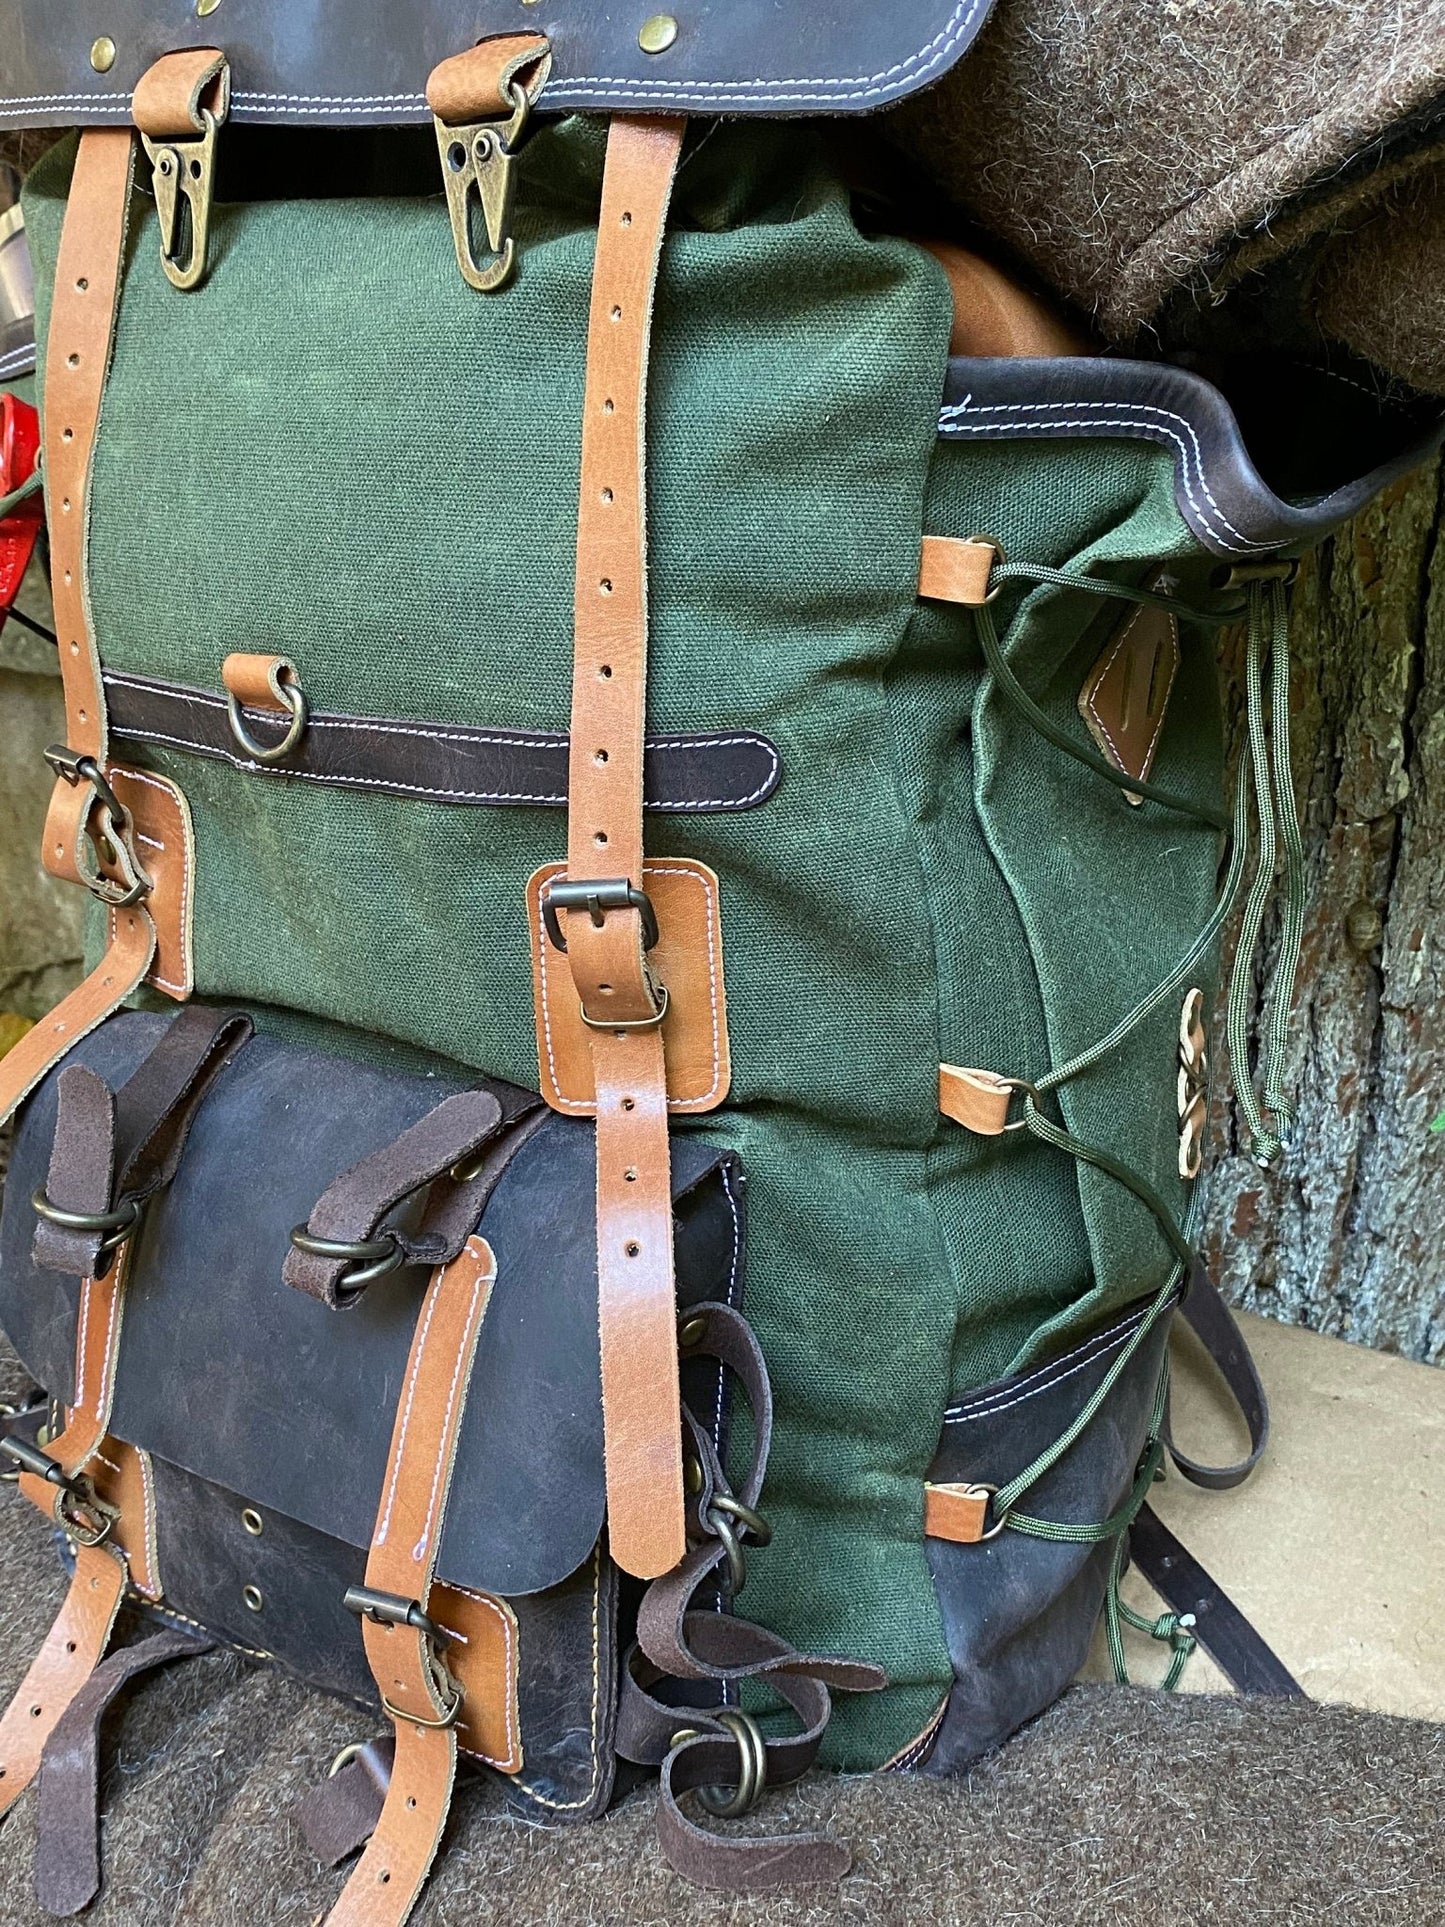 Unique Handmade Canvas Backpack | 50 L | Personalization| Leather Backpack | Bushcraft Bag | Travel, Camping, Hunting, Fishing, Sports Bag bushcraft - camping - hiking backpack 99percenthandmade   